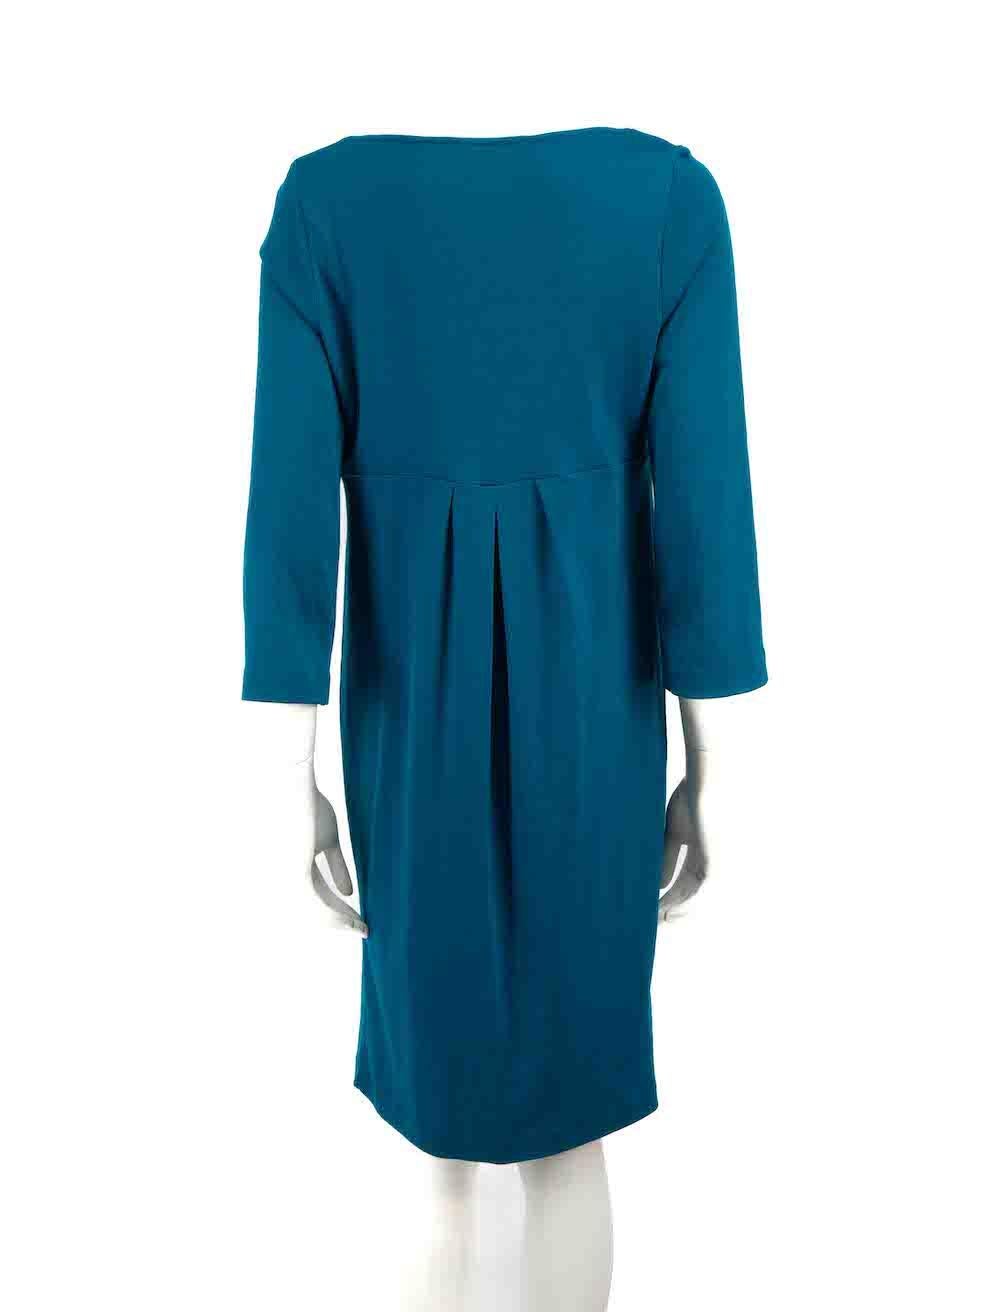 Diane Von Furstenberg Blue Wool Knee Length Dress Size XXL In Good Condition For Sale In London, GB